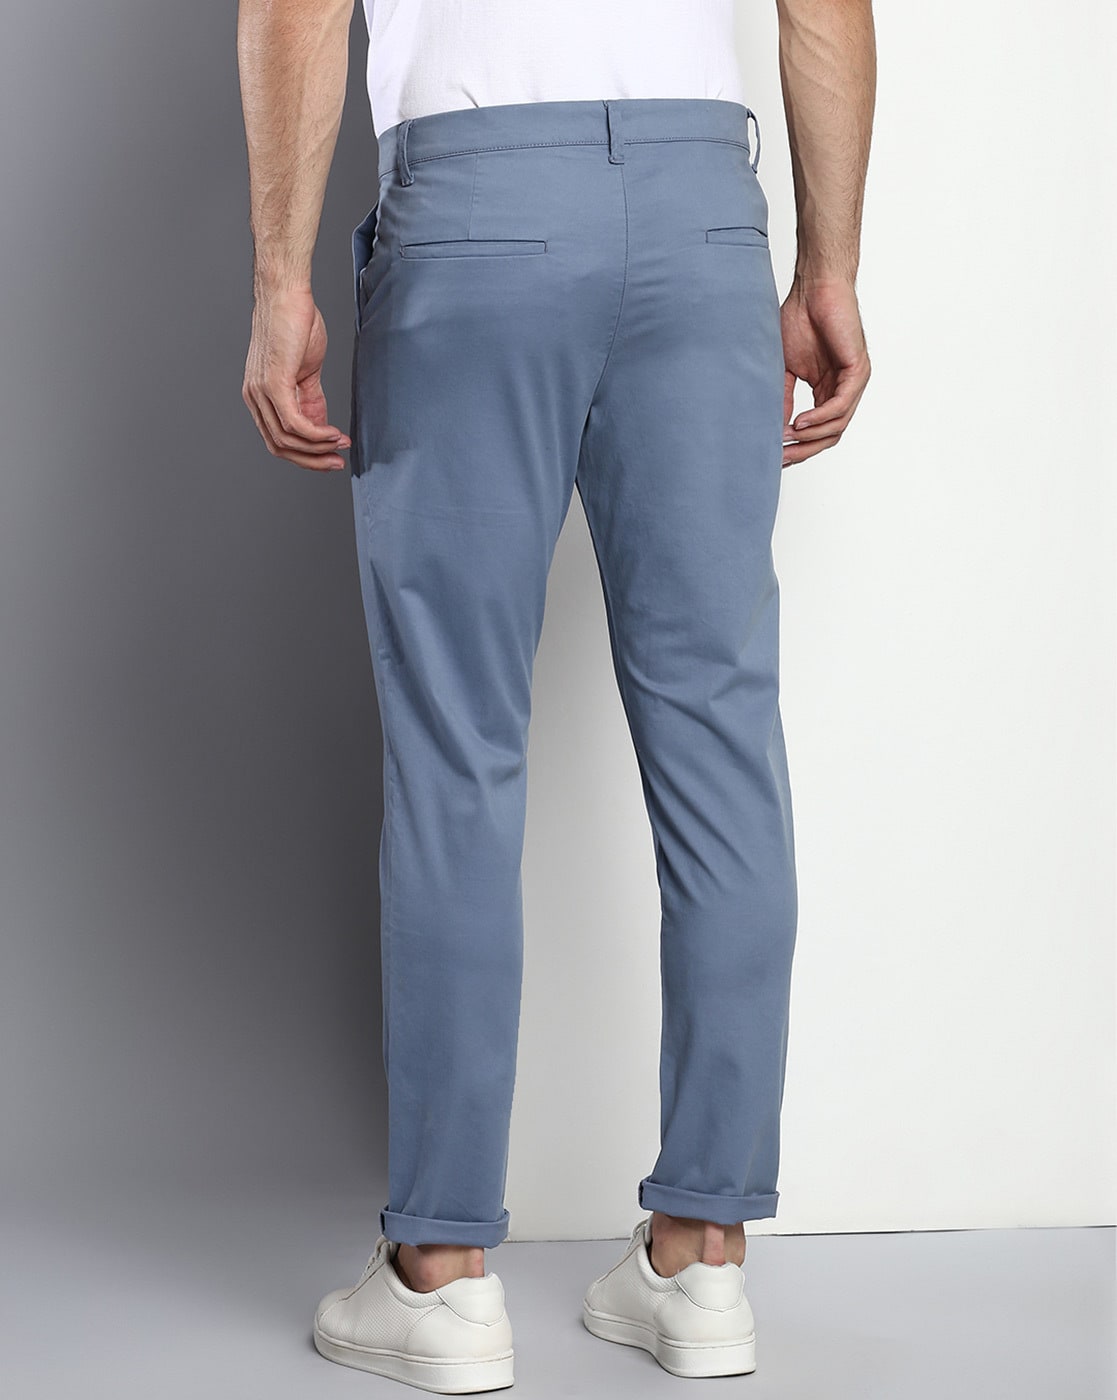 Men's light blue dress pants – Wildlee